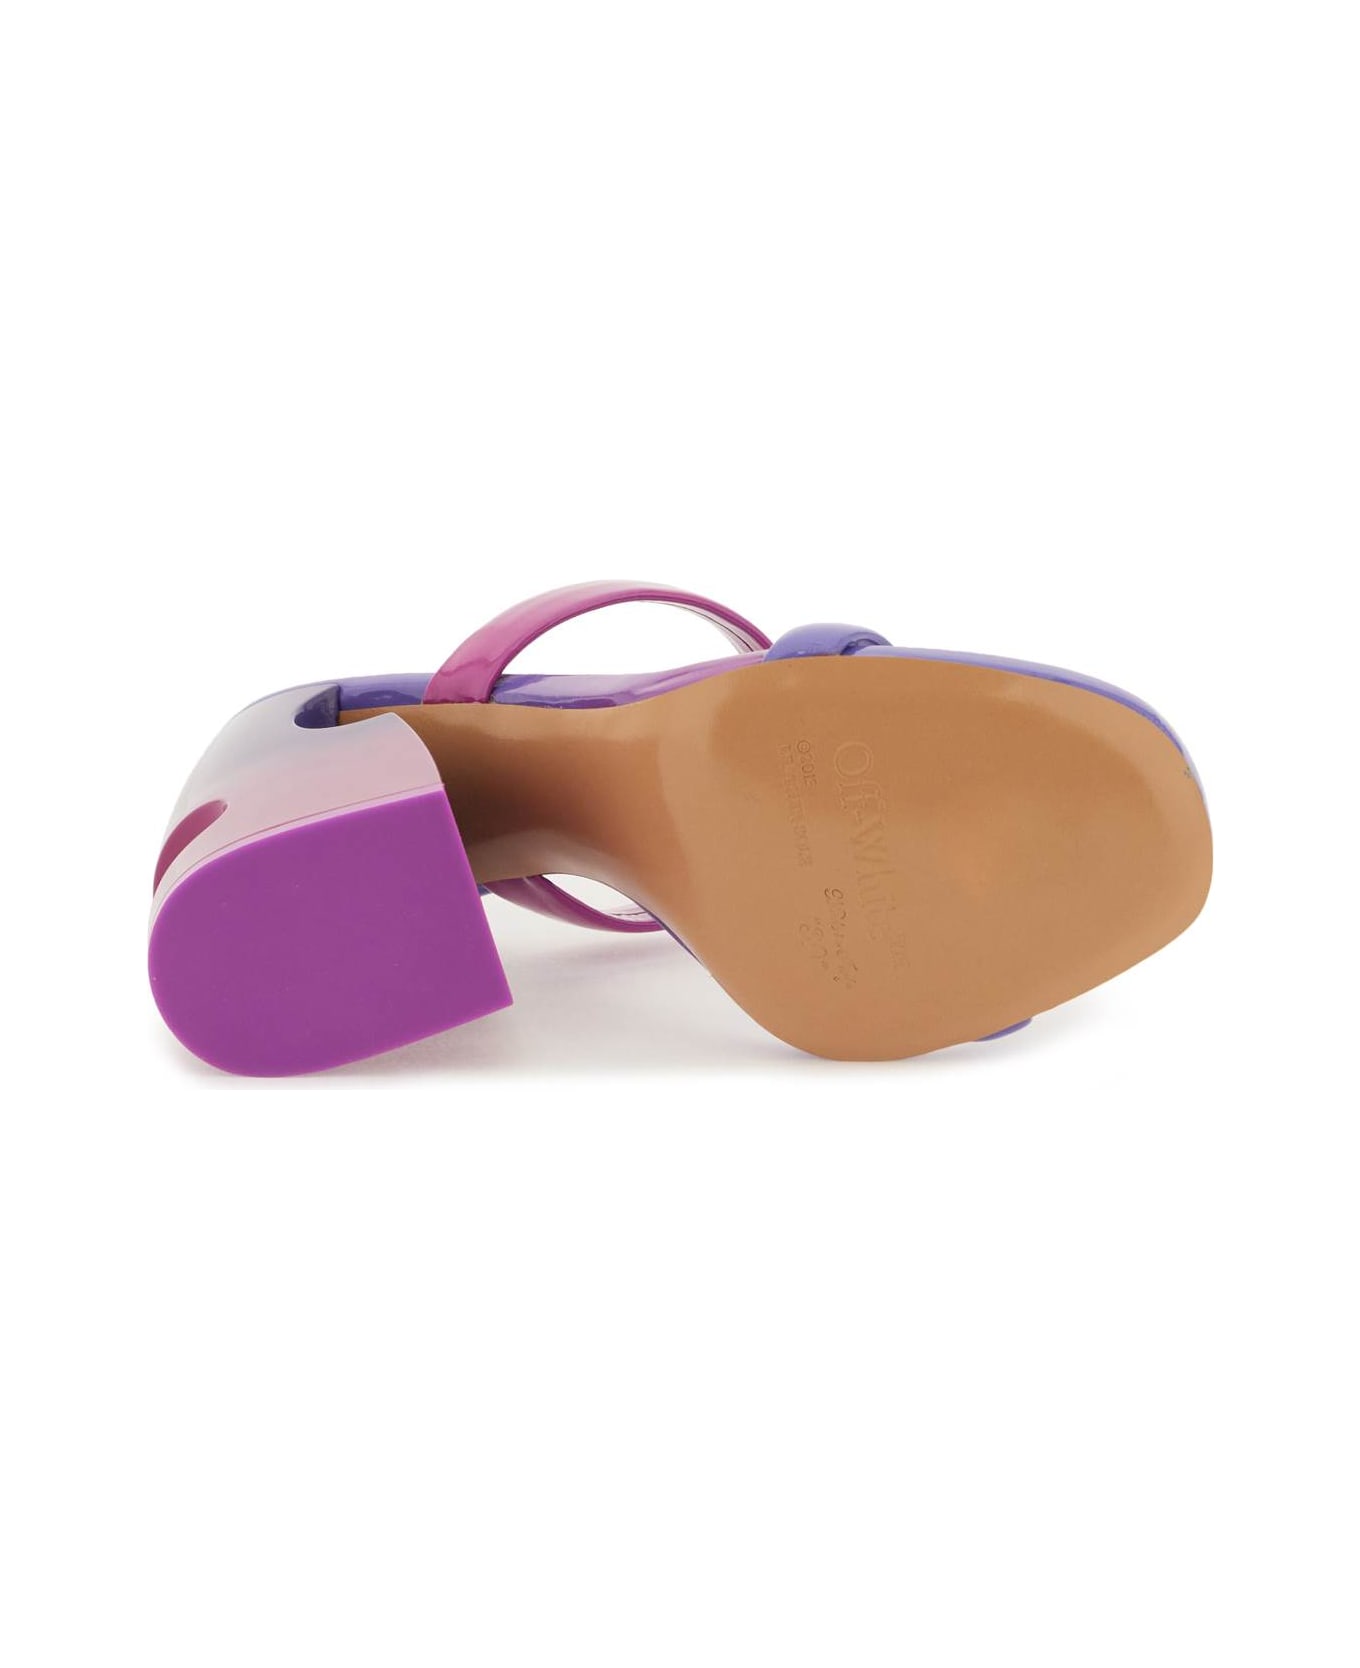 Off-White Lea Mule Sandal - FUCHSIA VIOL (Purple)